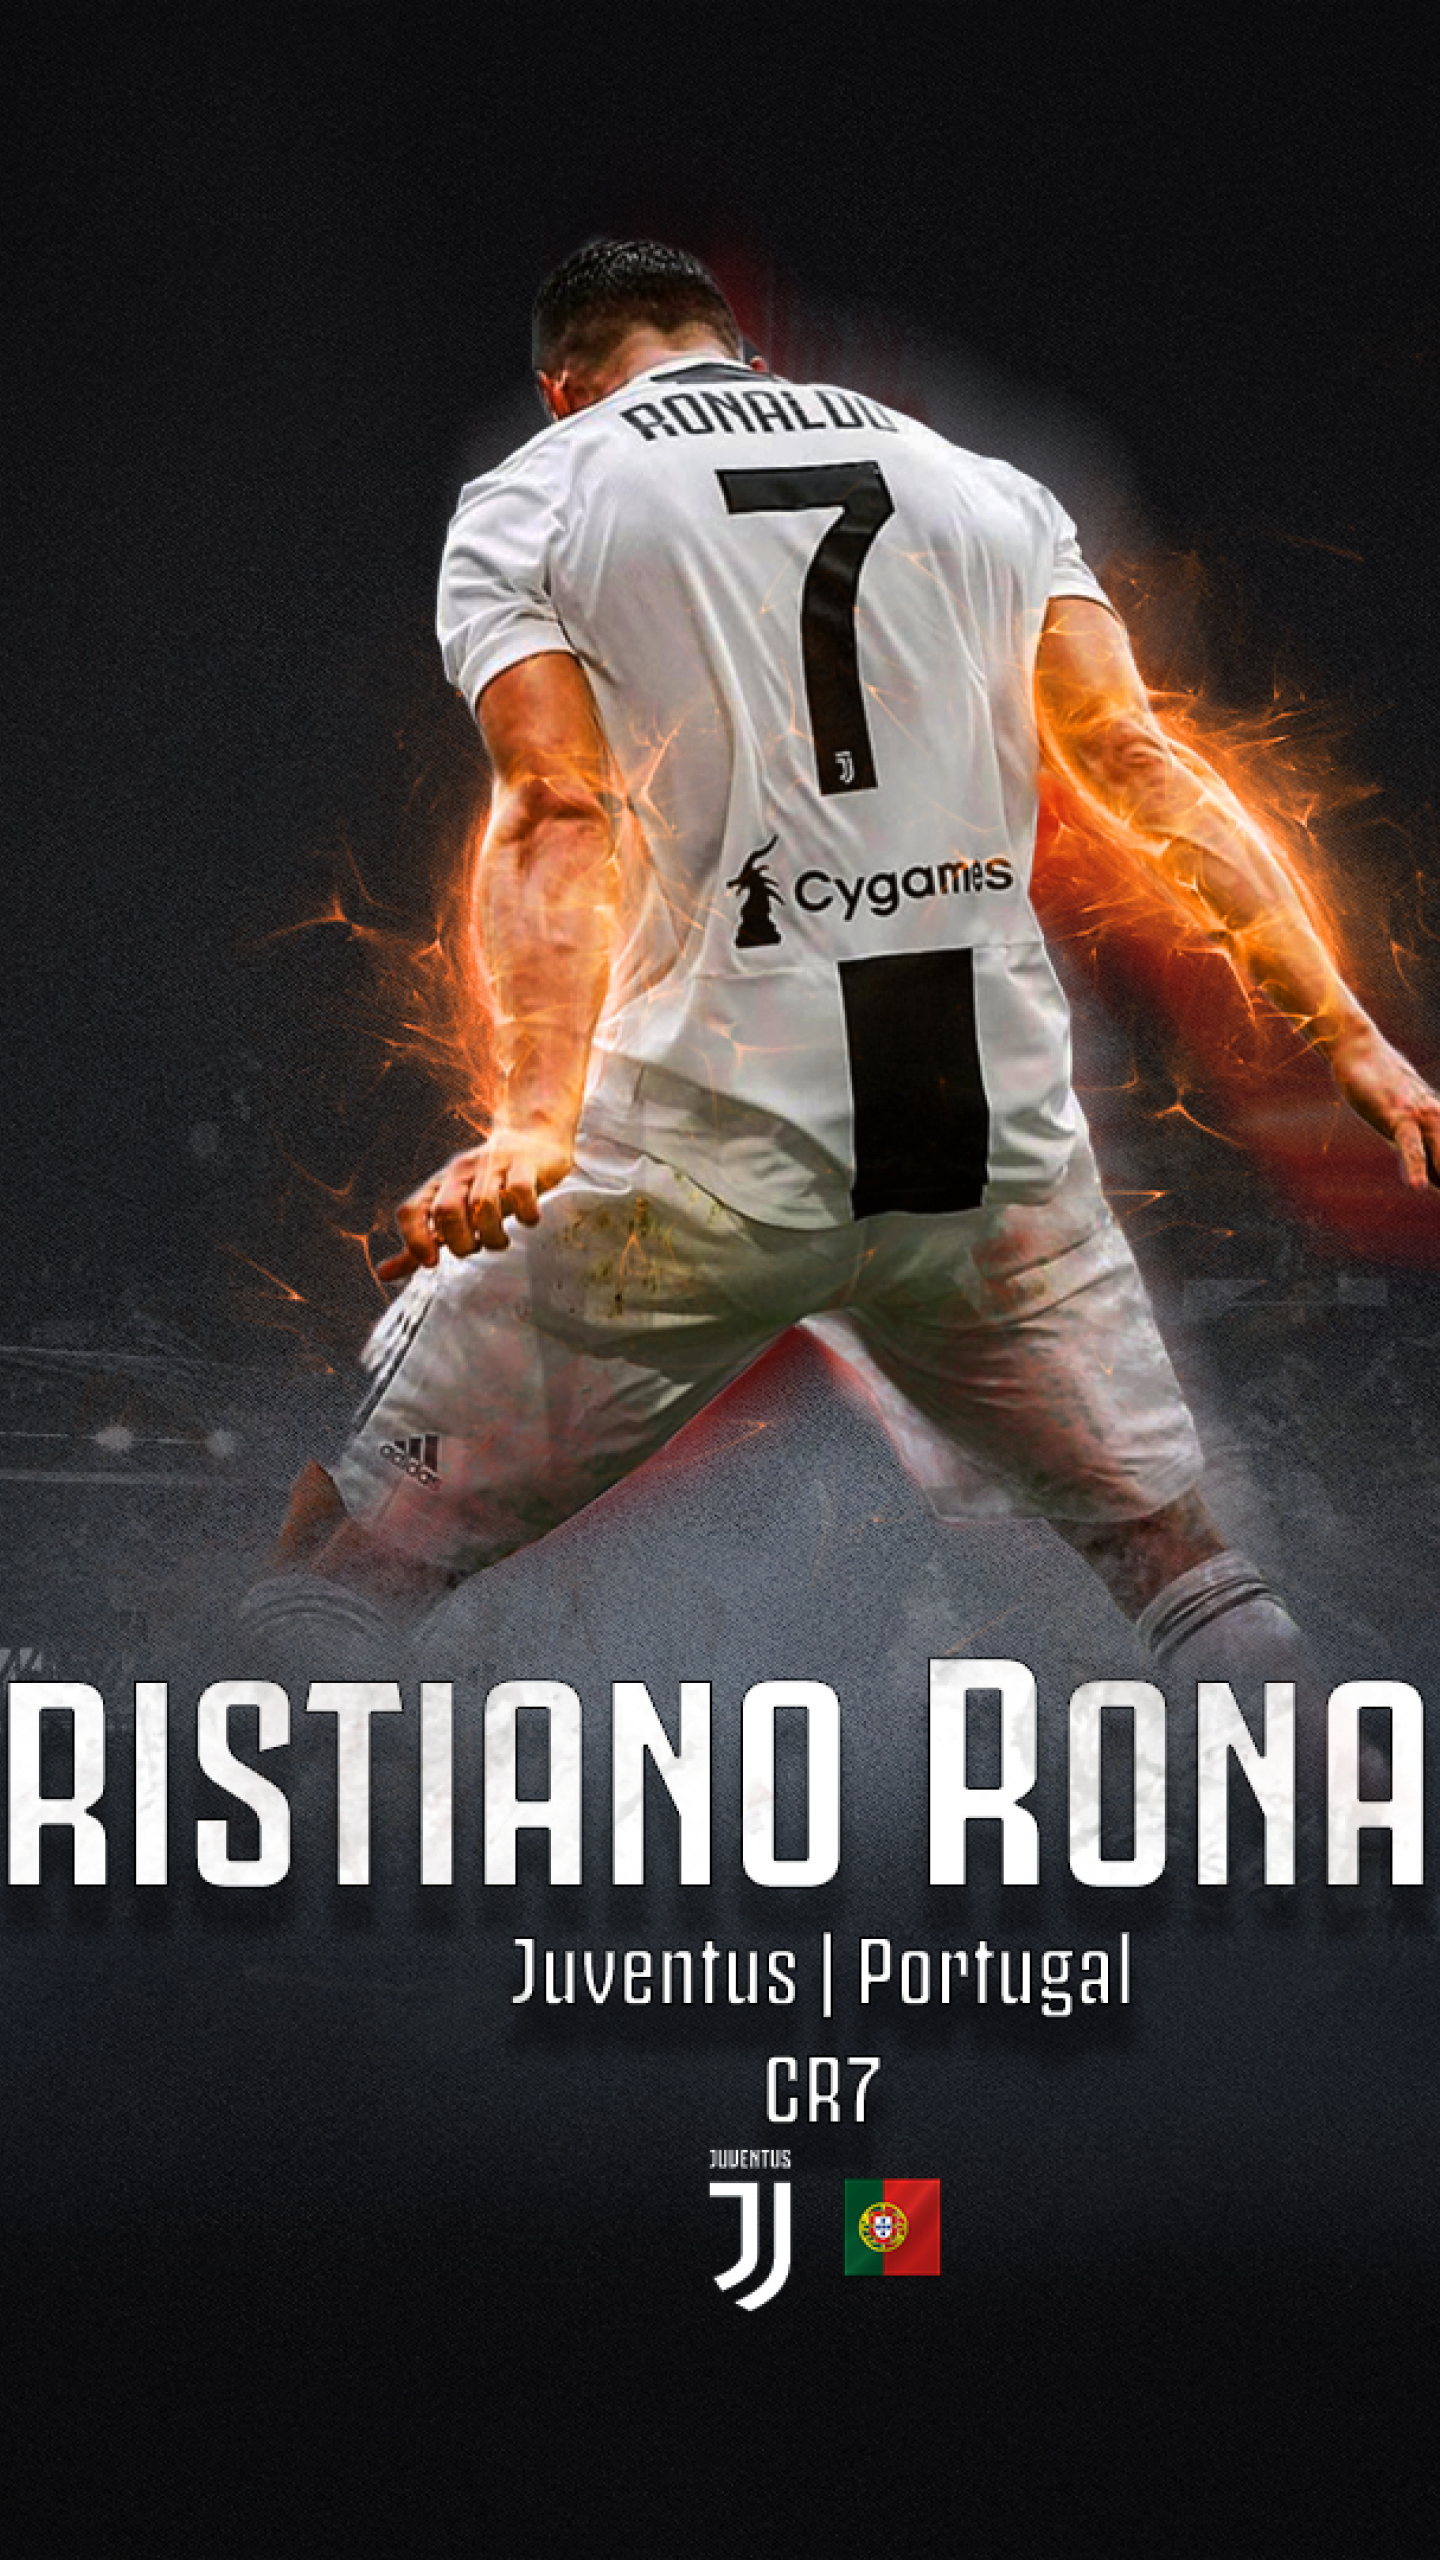 Cristiano Ronaldo IPhone Wallpaper  IPhone Wallpapers  iPhone Wallpapers